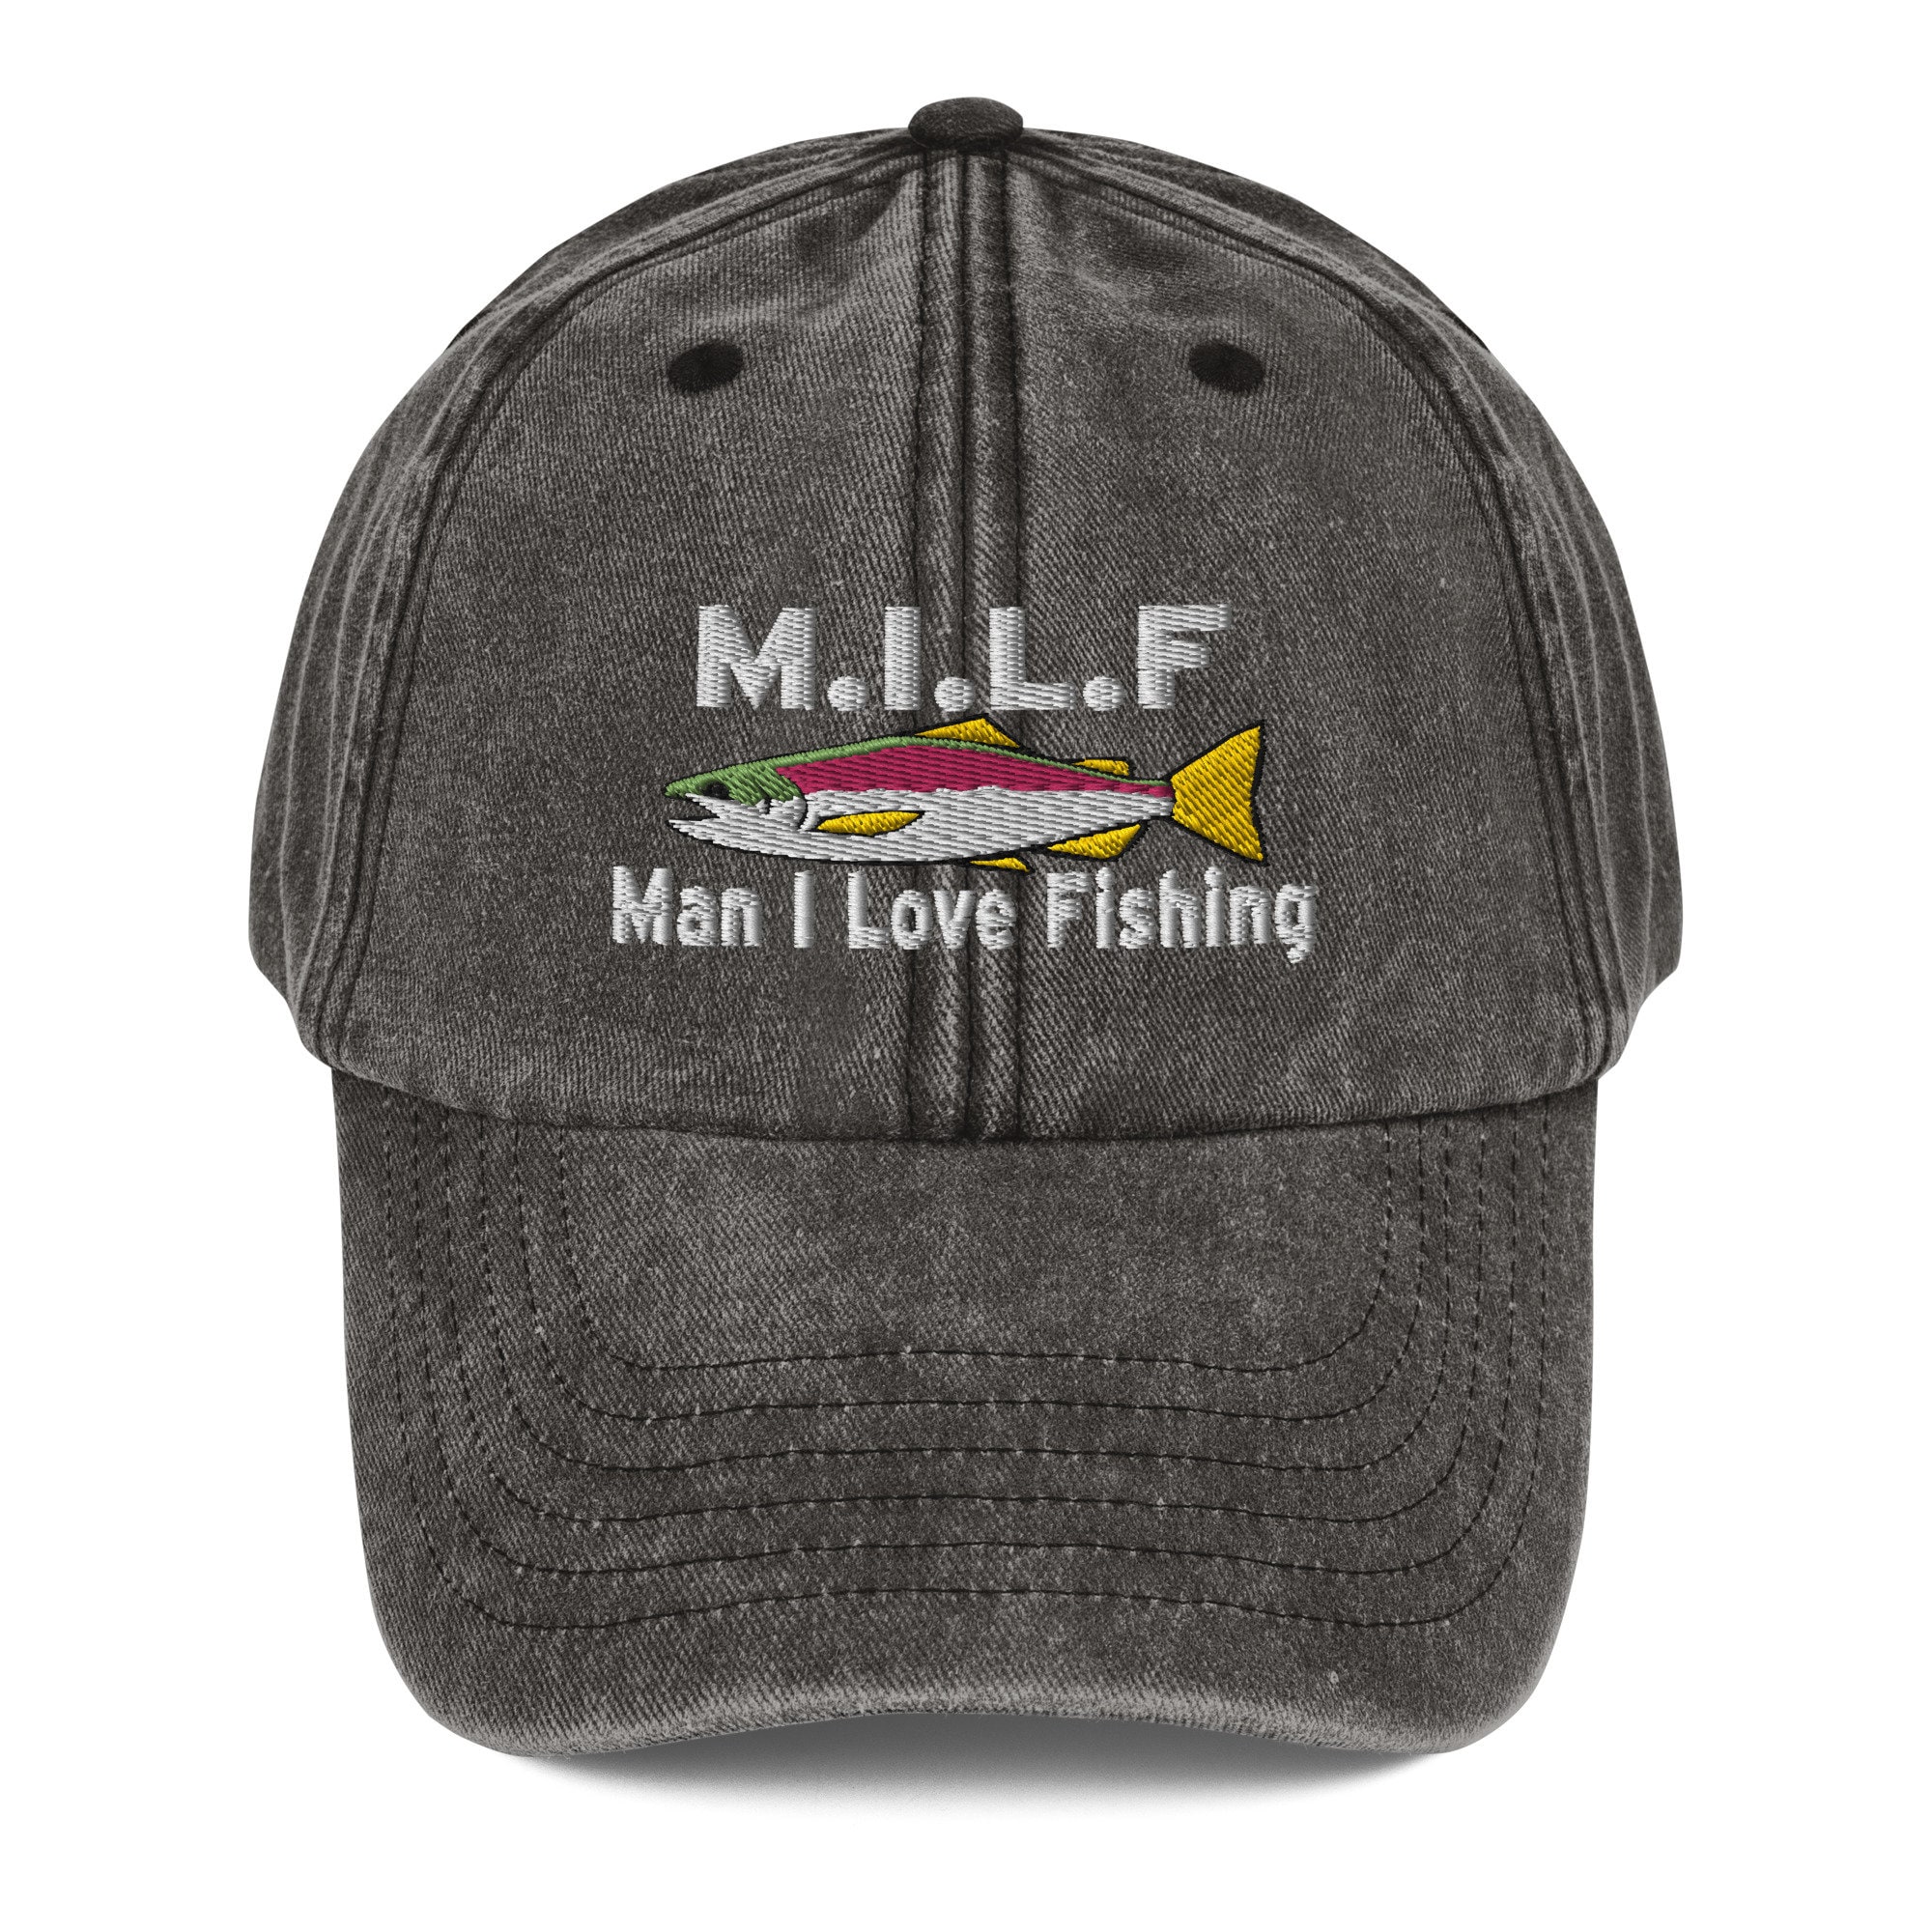 Vintage funny trucker hat Fish cussin cap fisherman mens humor boating fish  hat